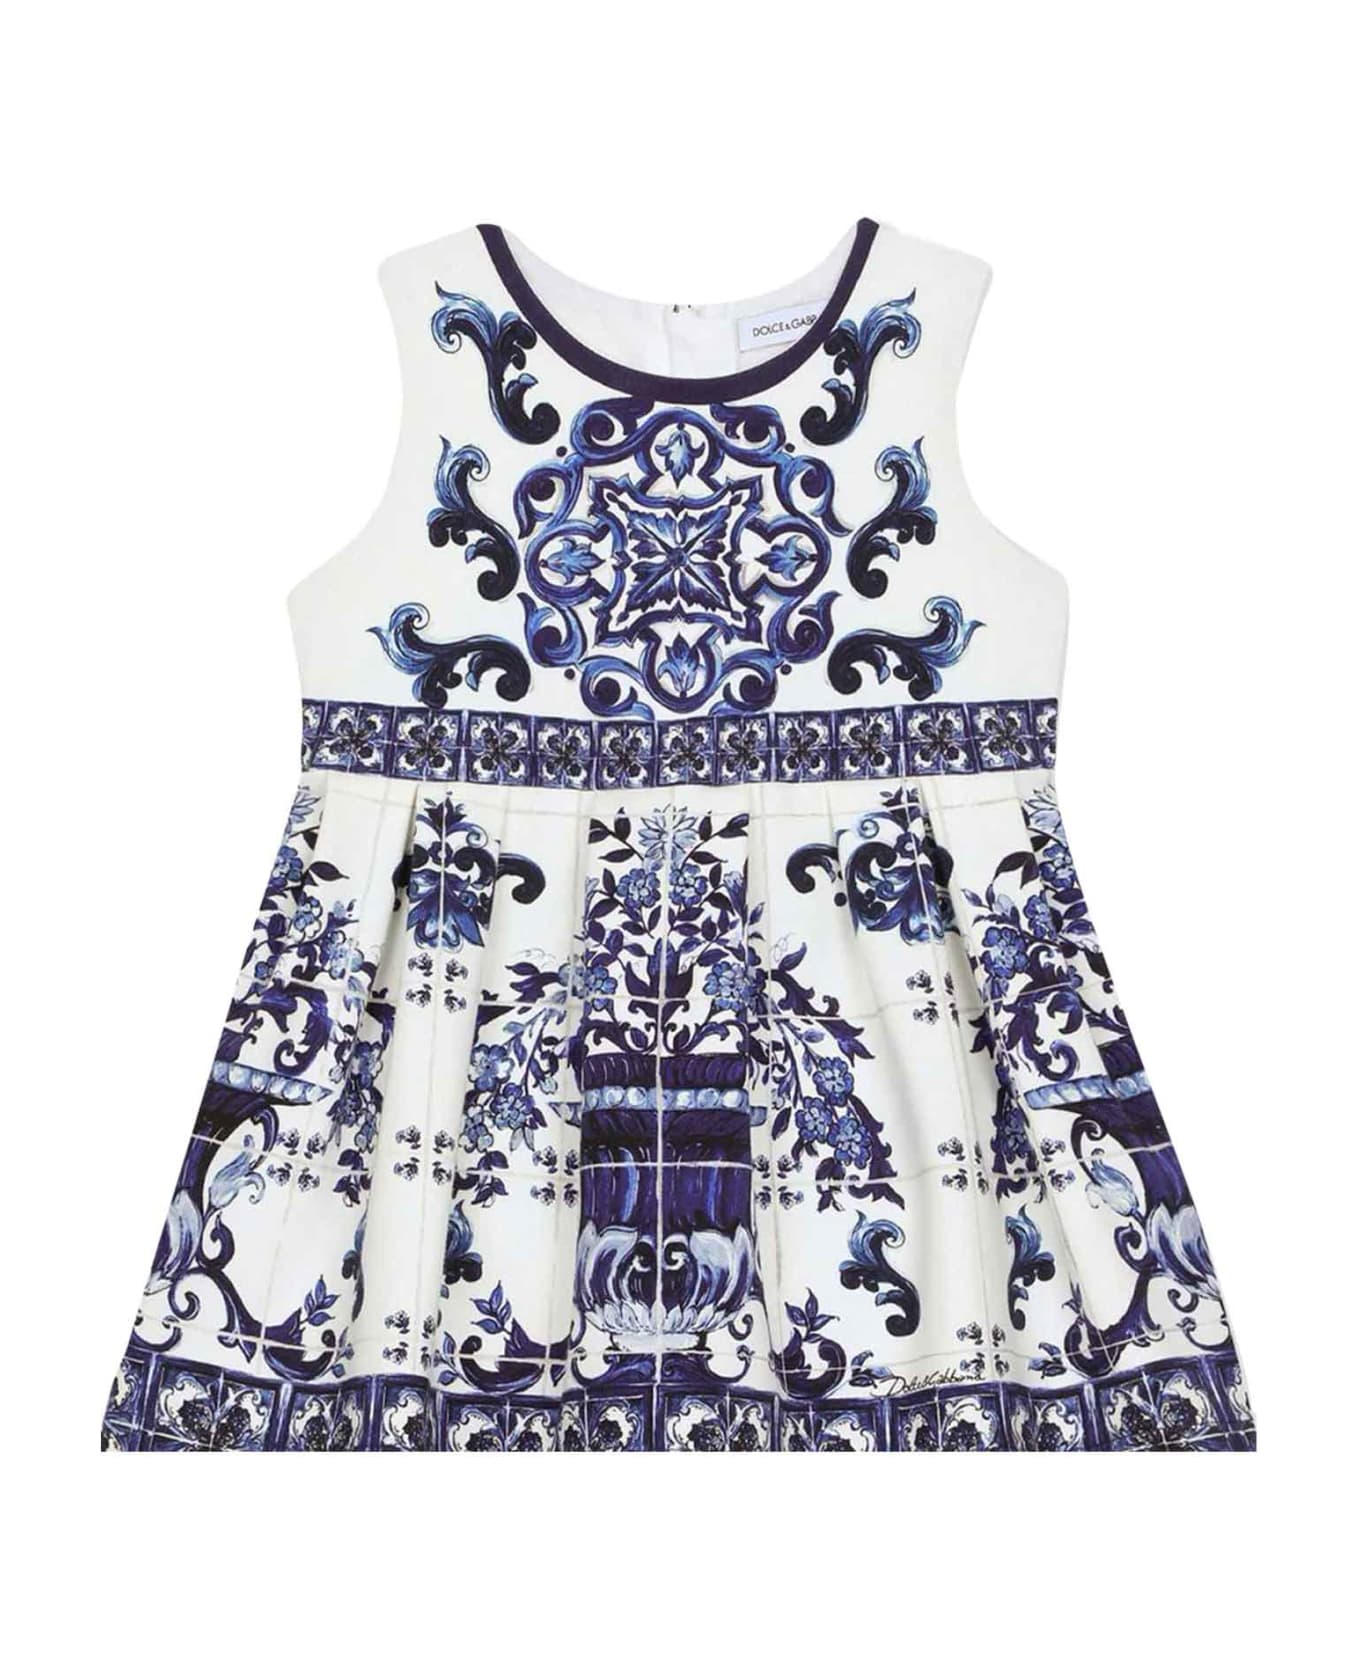 Dolce & Gabbana White / Blue Dress And Shorts Set Baby Girl - Bianco/blu